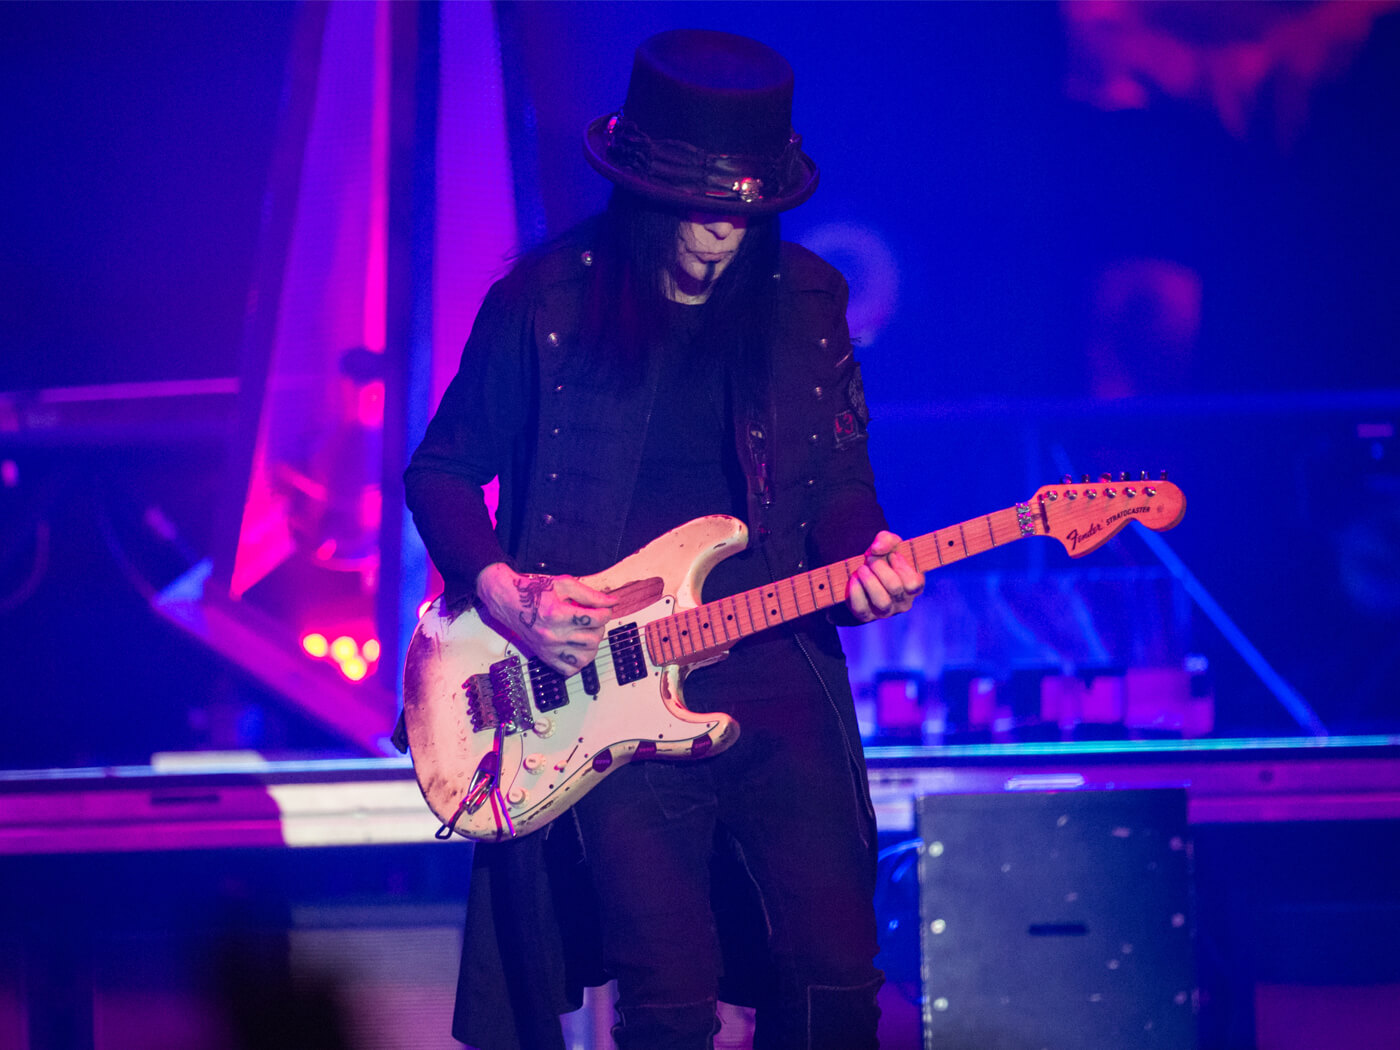 Mick Mars of Mötley Crüe performs in Wembley, London in 2015